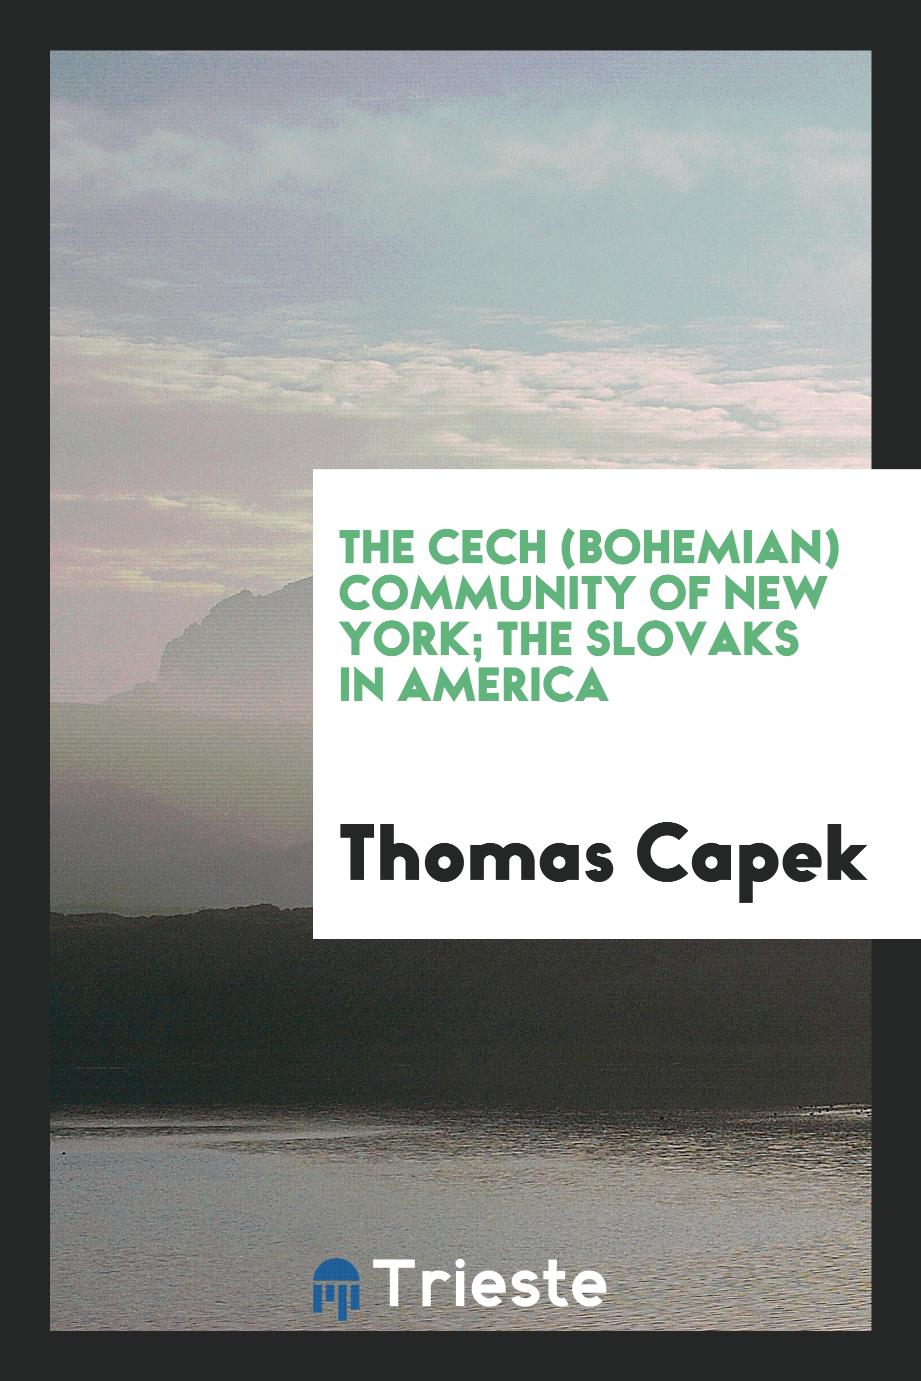 The Cech (Bohemian) community of New York; The Slovaks in America